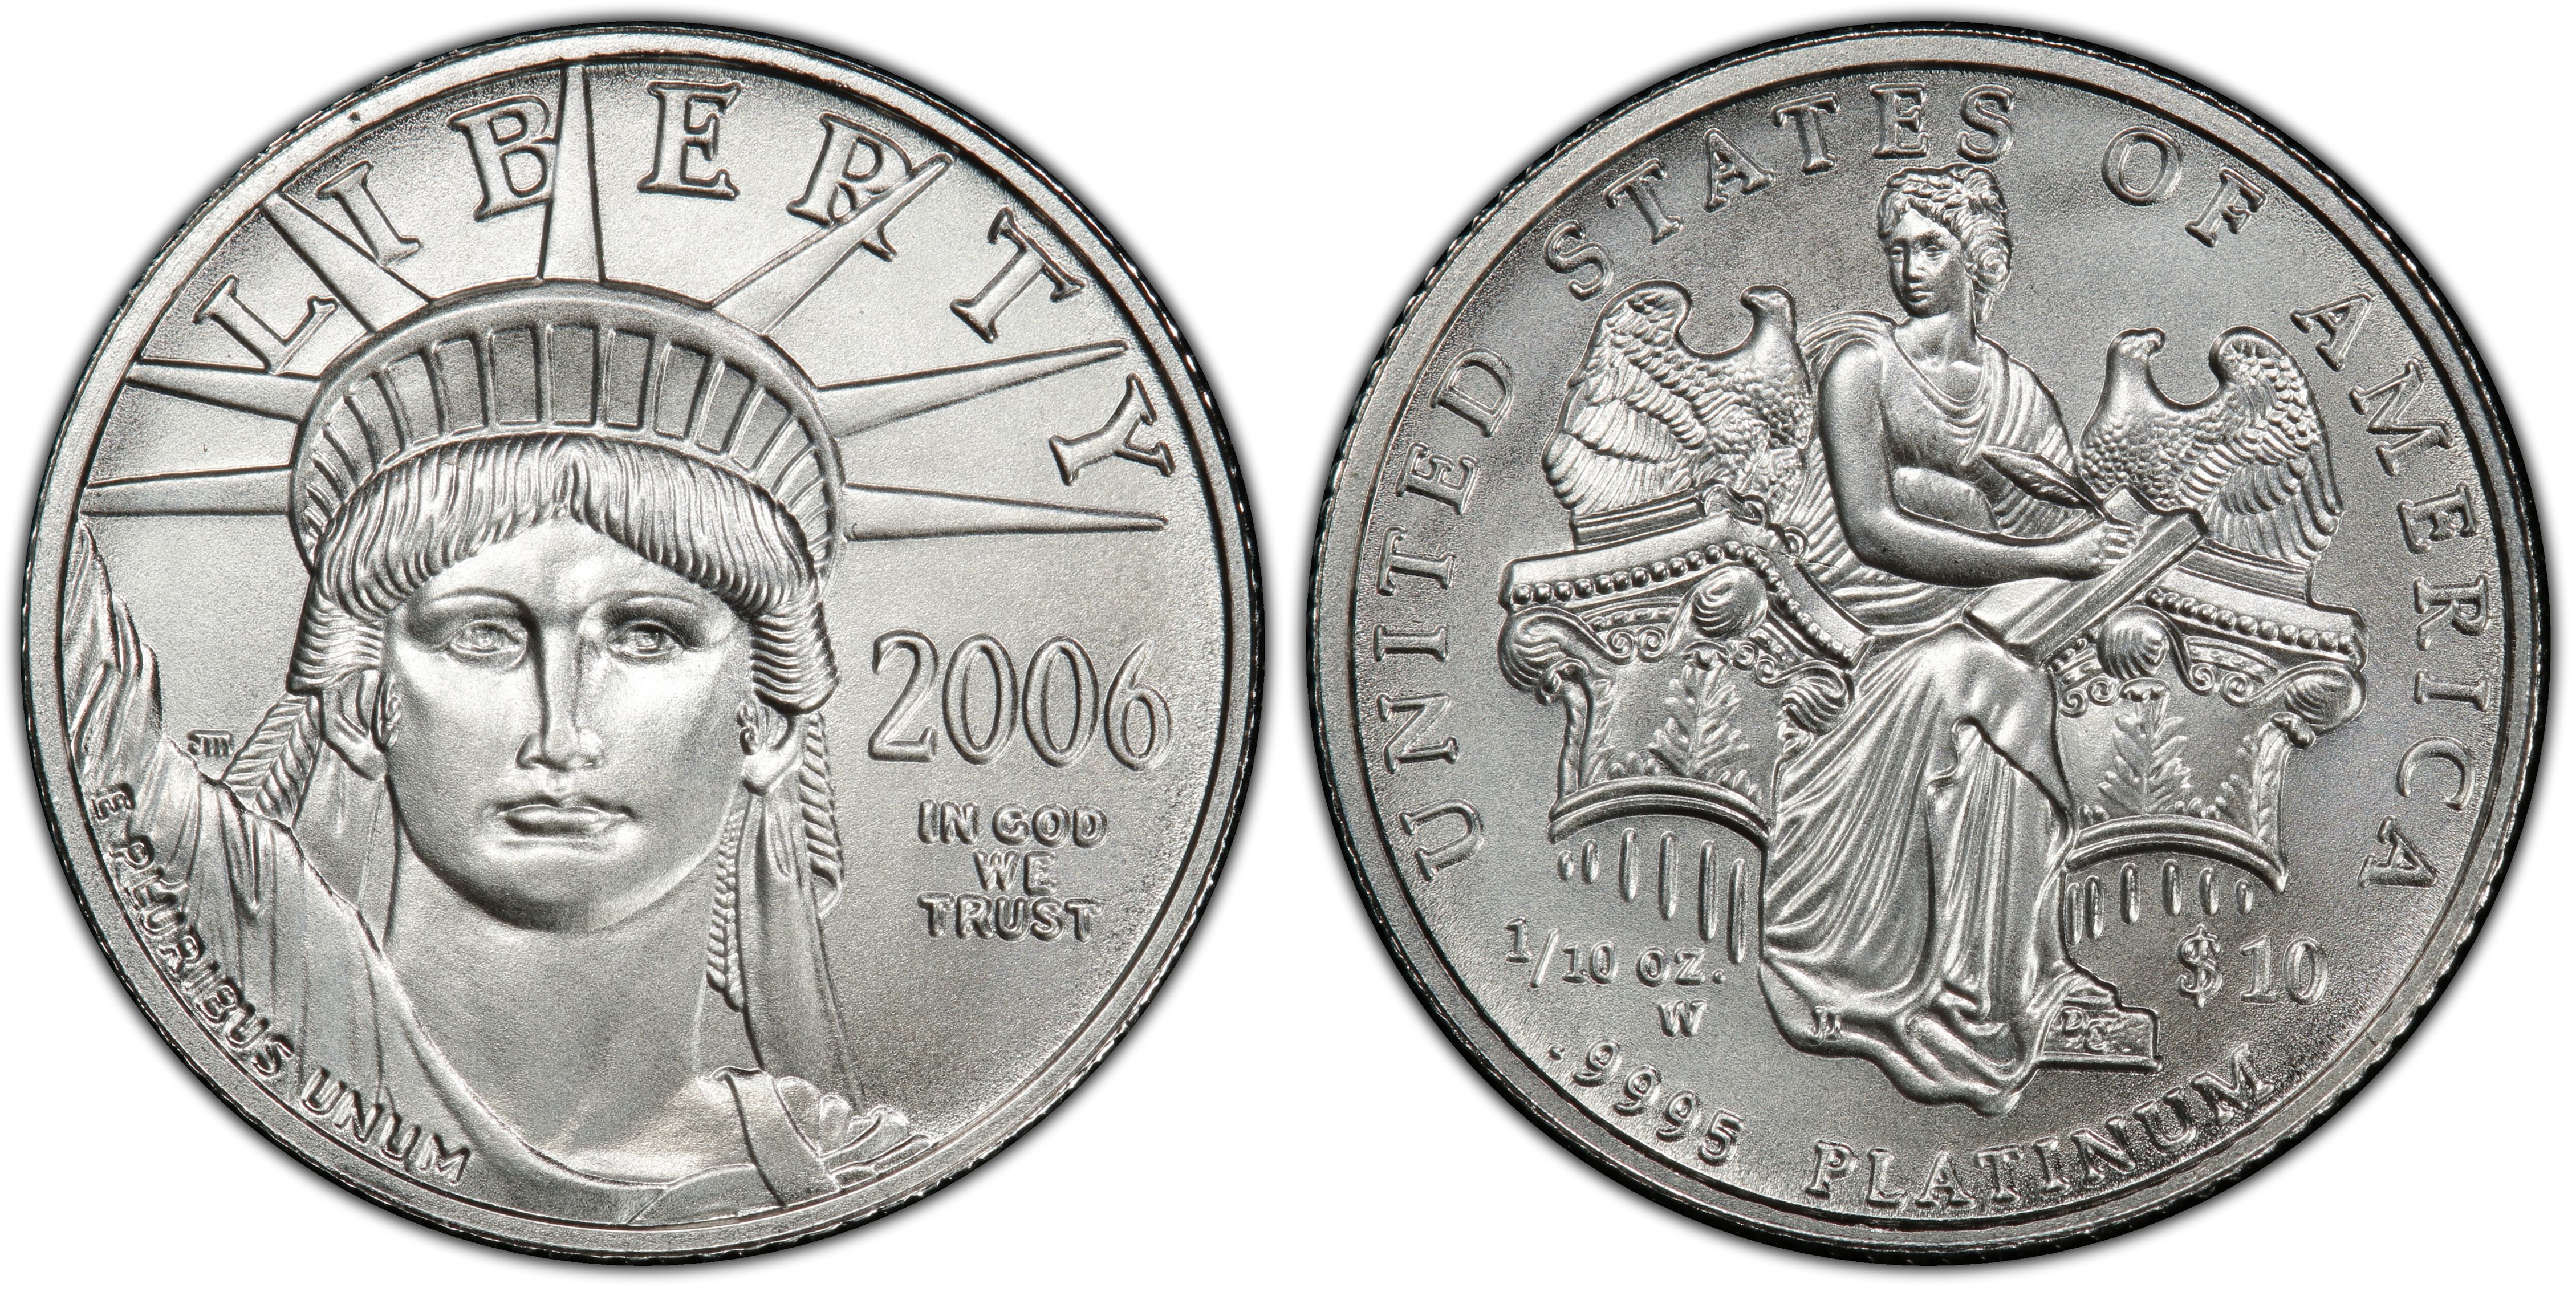 liberty 2006 coin